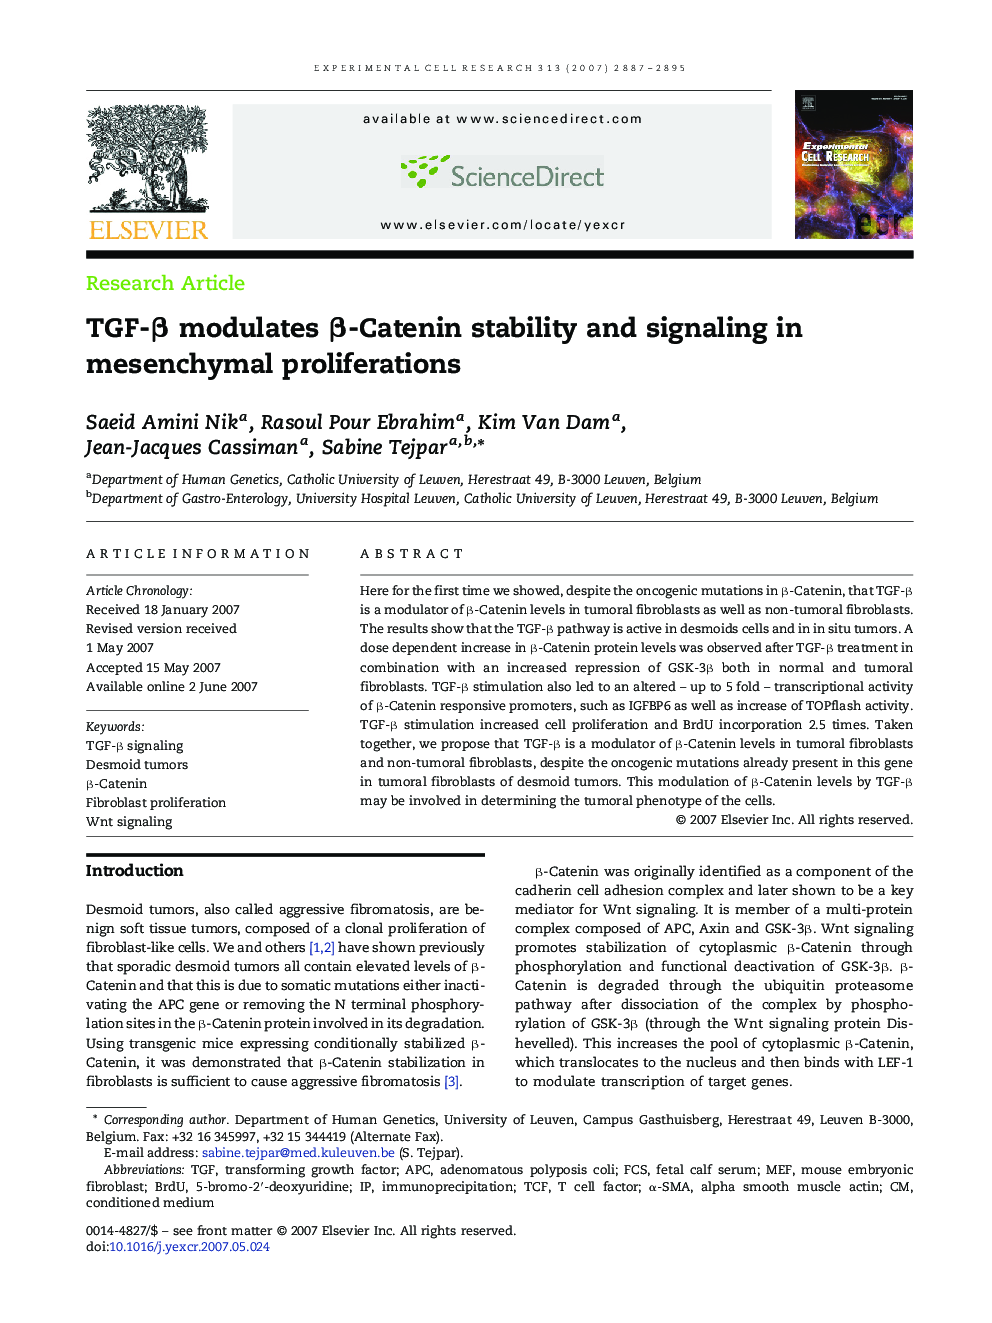 TGF-Î² modulates Î²-Catenin stability and signaling in mesenchymal proliferations